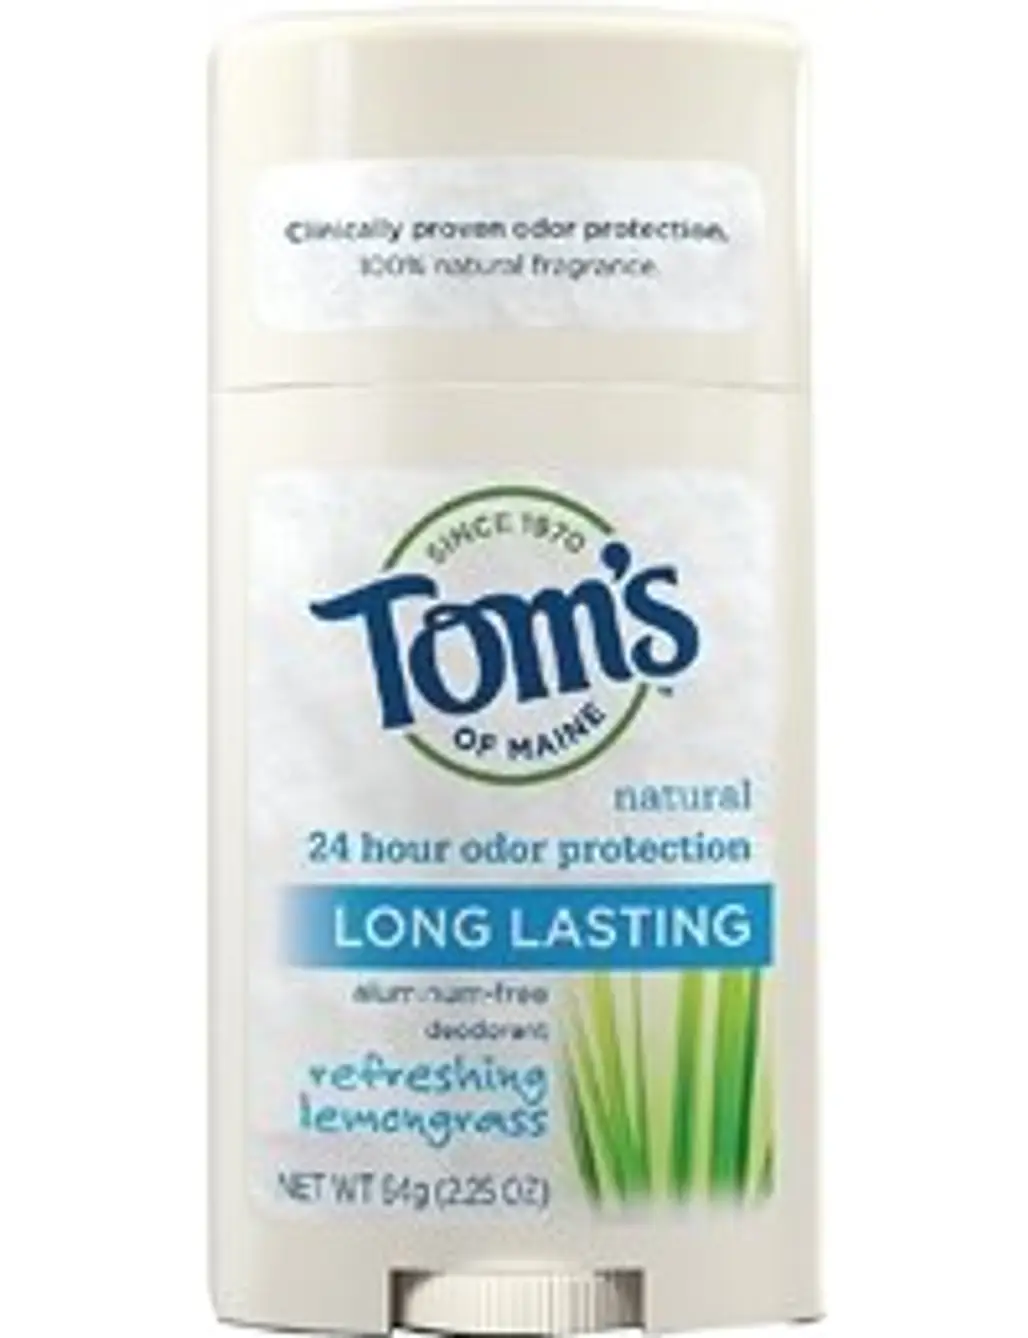 Tom’s of Maine Natural Deodorant Stick